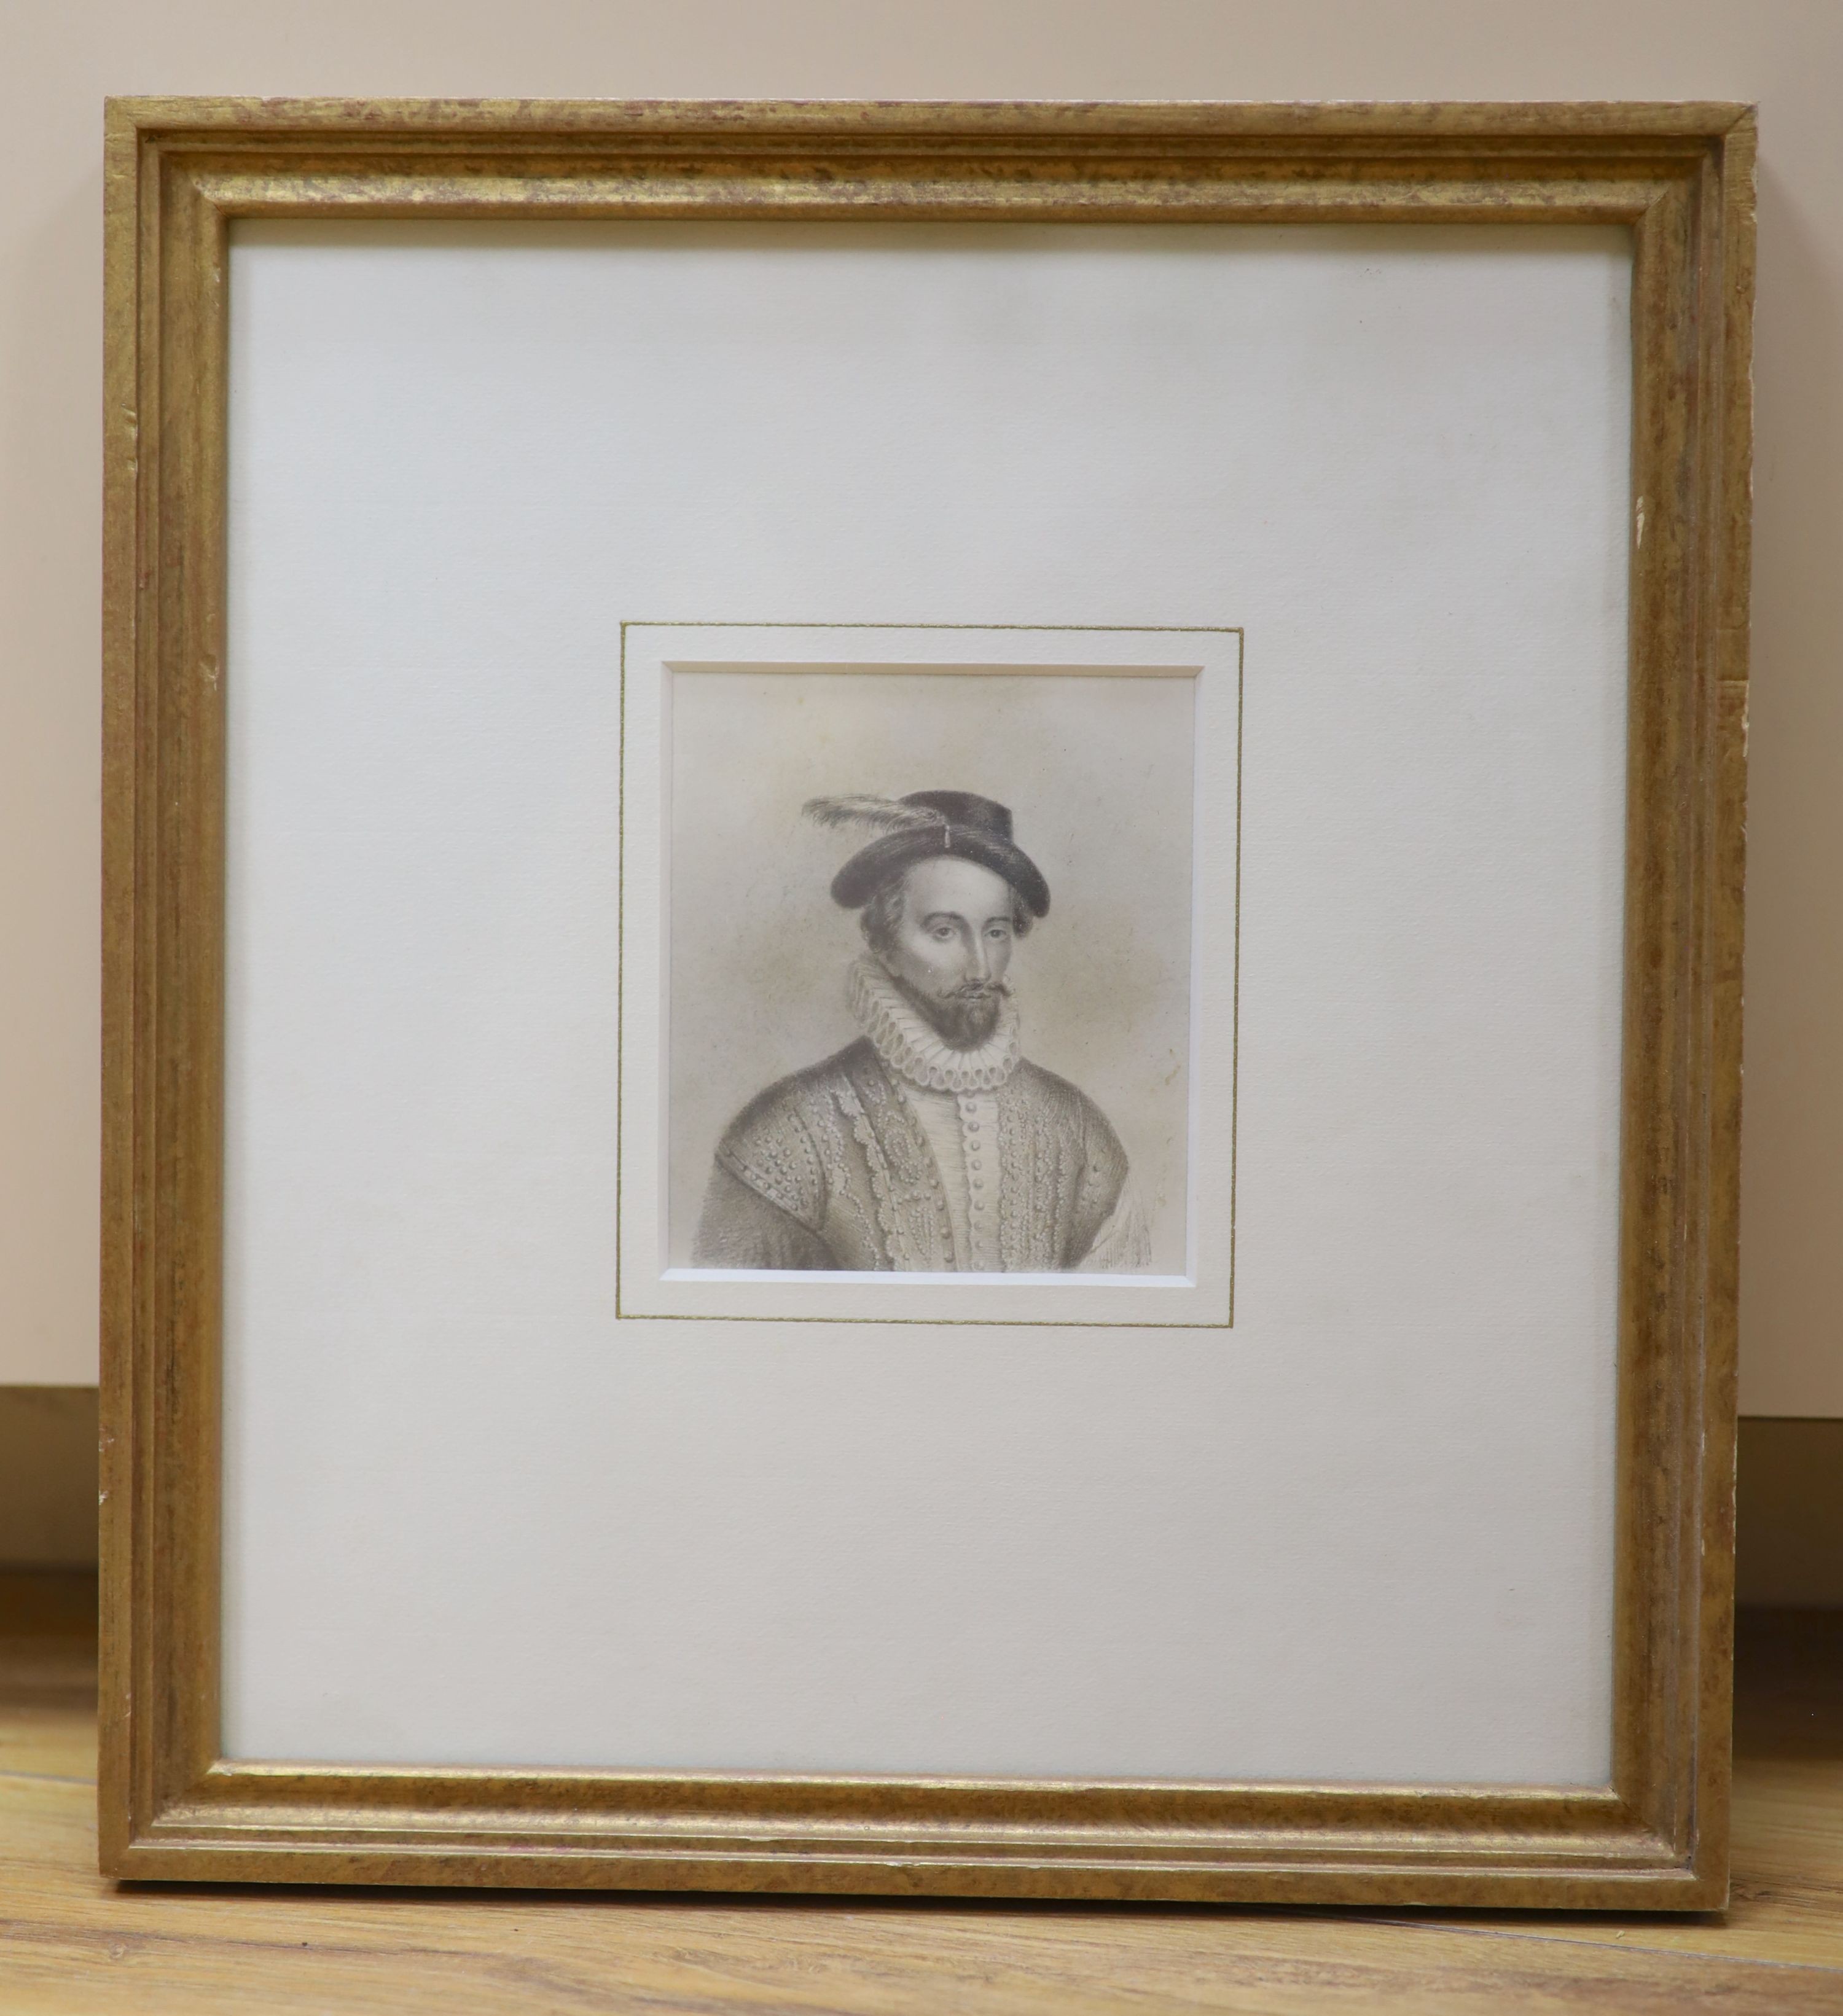 19th century English school, pencil on paper, portrait of Sir Walter Raleigh, 9.5 x 8cm.